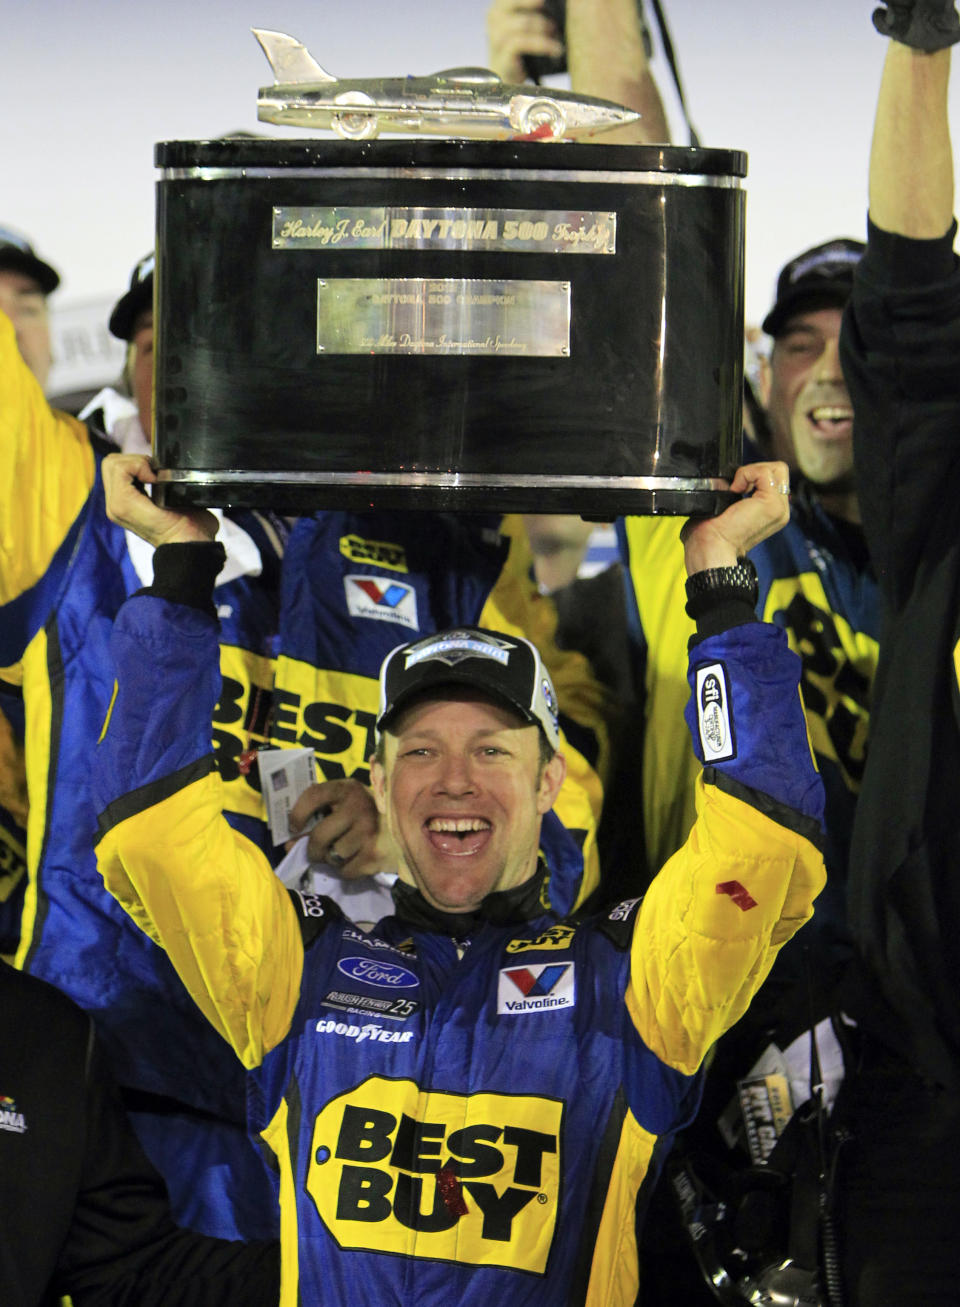 Matt Kenseth hoists the trophy in victory lane after winning the NASCAR Daytona 500 Sprint Cup series auto race at Daytona International Speedway in Daytona Beach, Fla., Tuesday, Feb. 28, 2012. (AP Photo/John Raoux)